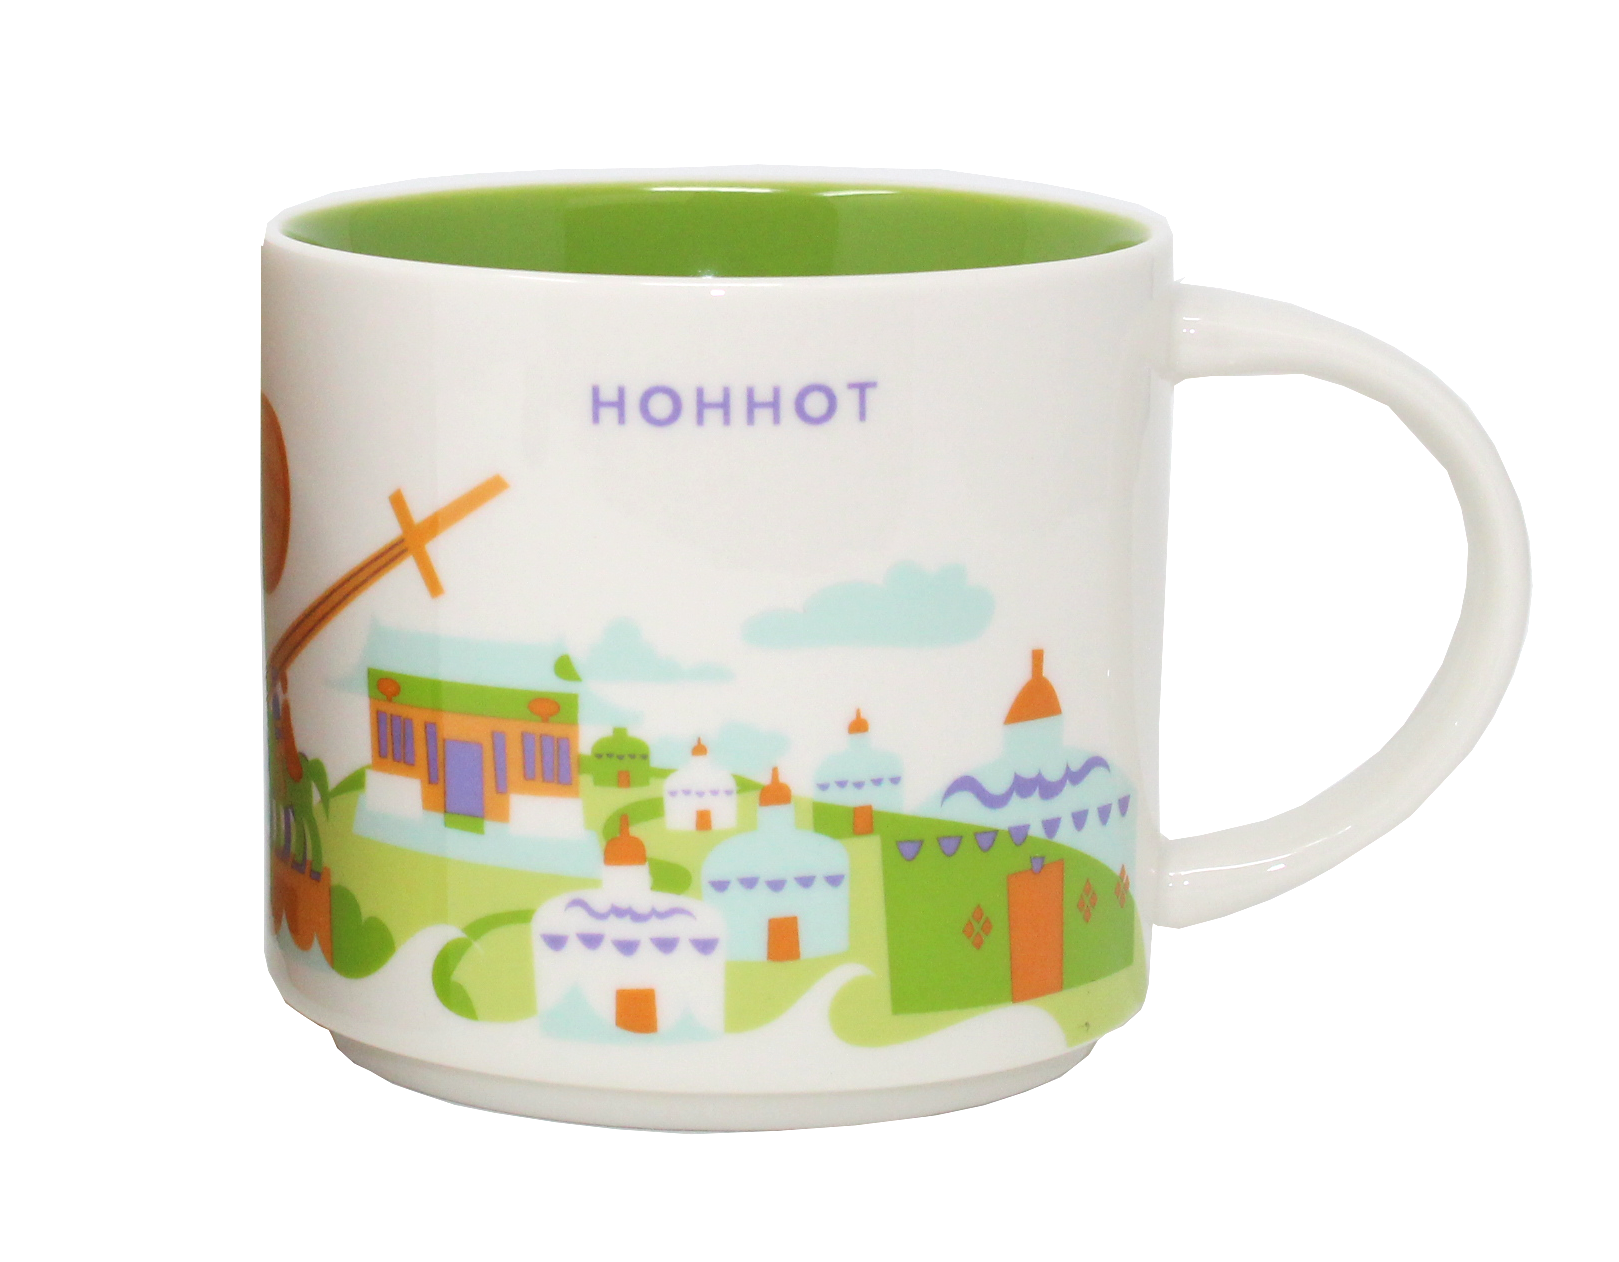 Starbucks You Are Here Series Hohhot Ceramic Mug, 14 Oz